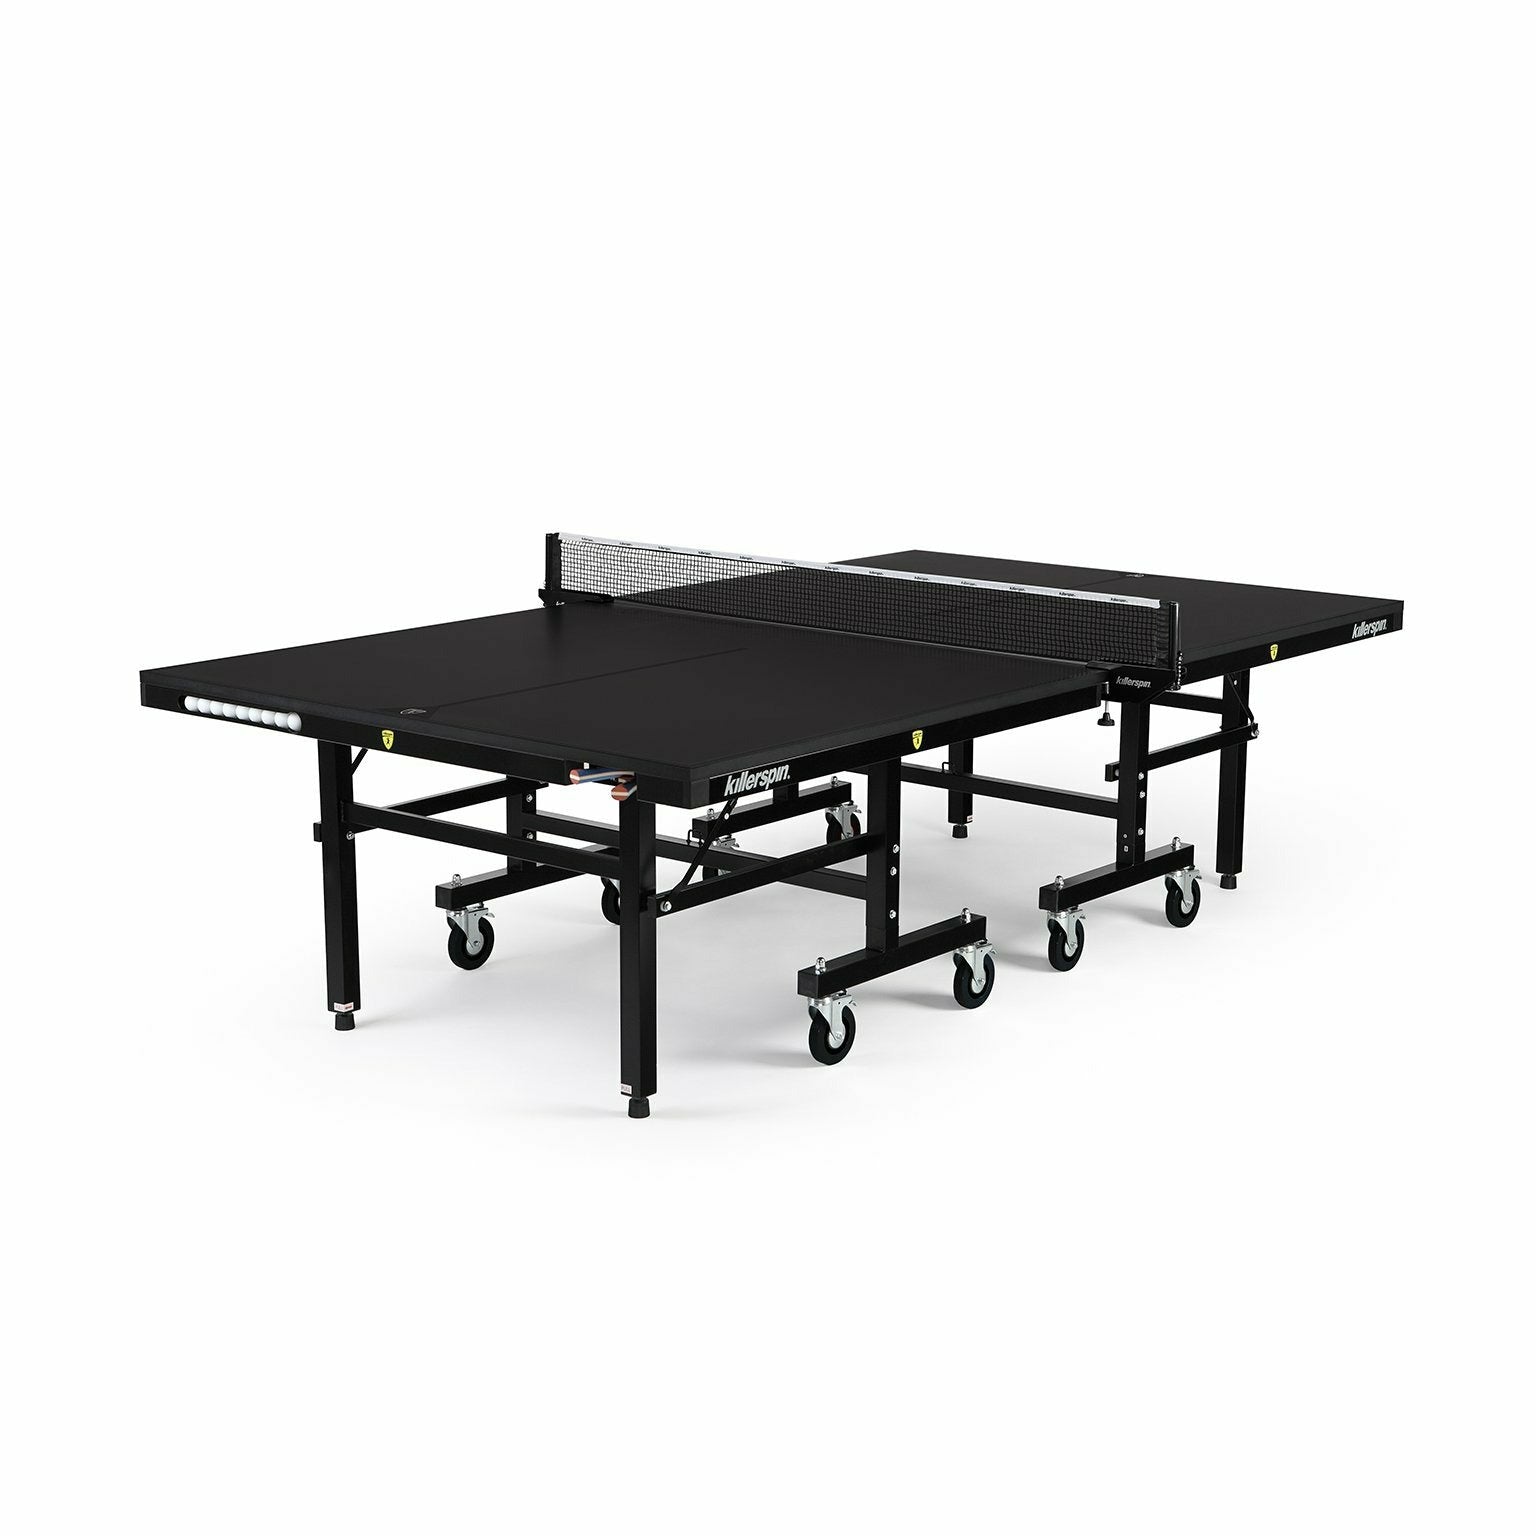 Killerspin MyT 415 Max - Jet Black Table Tennis Table 1